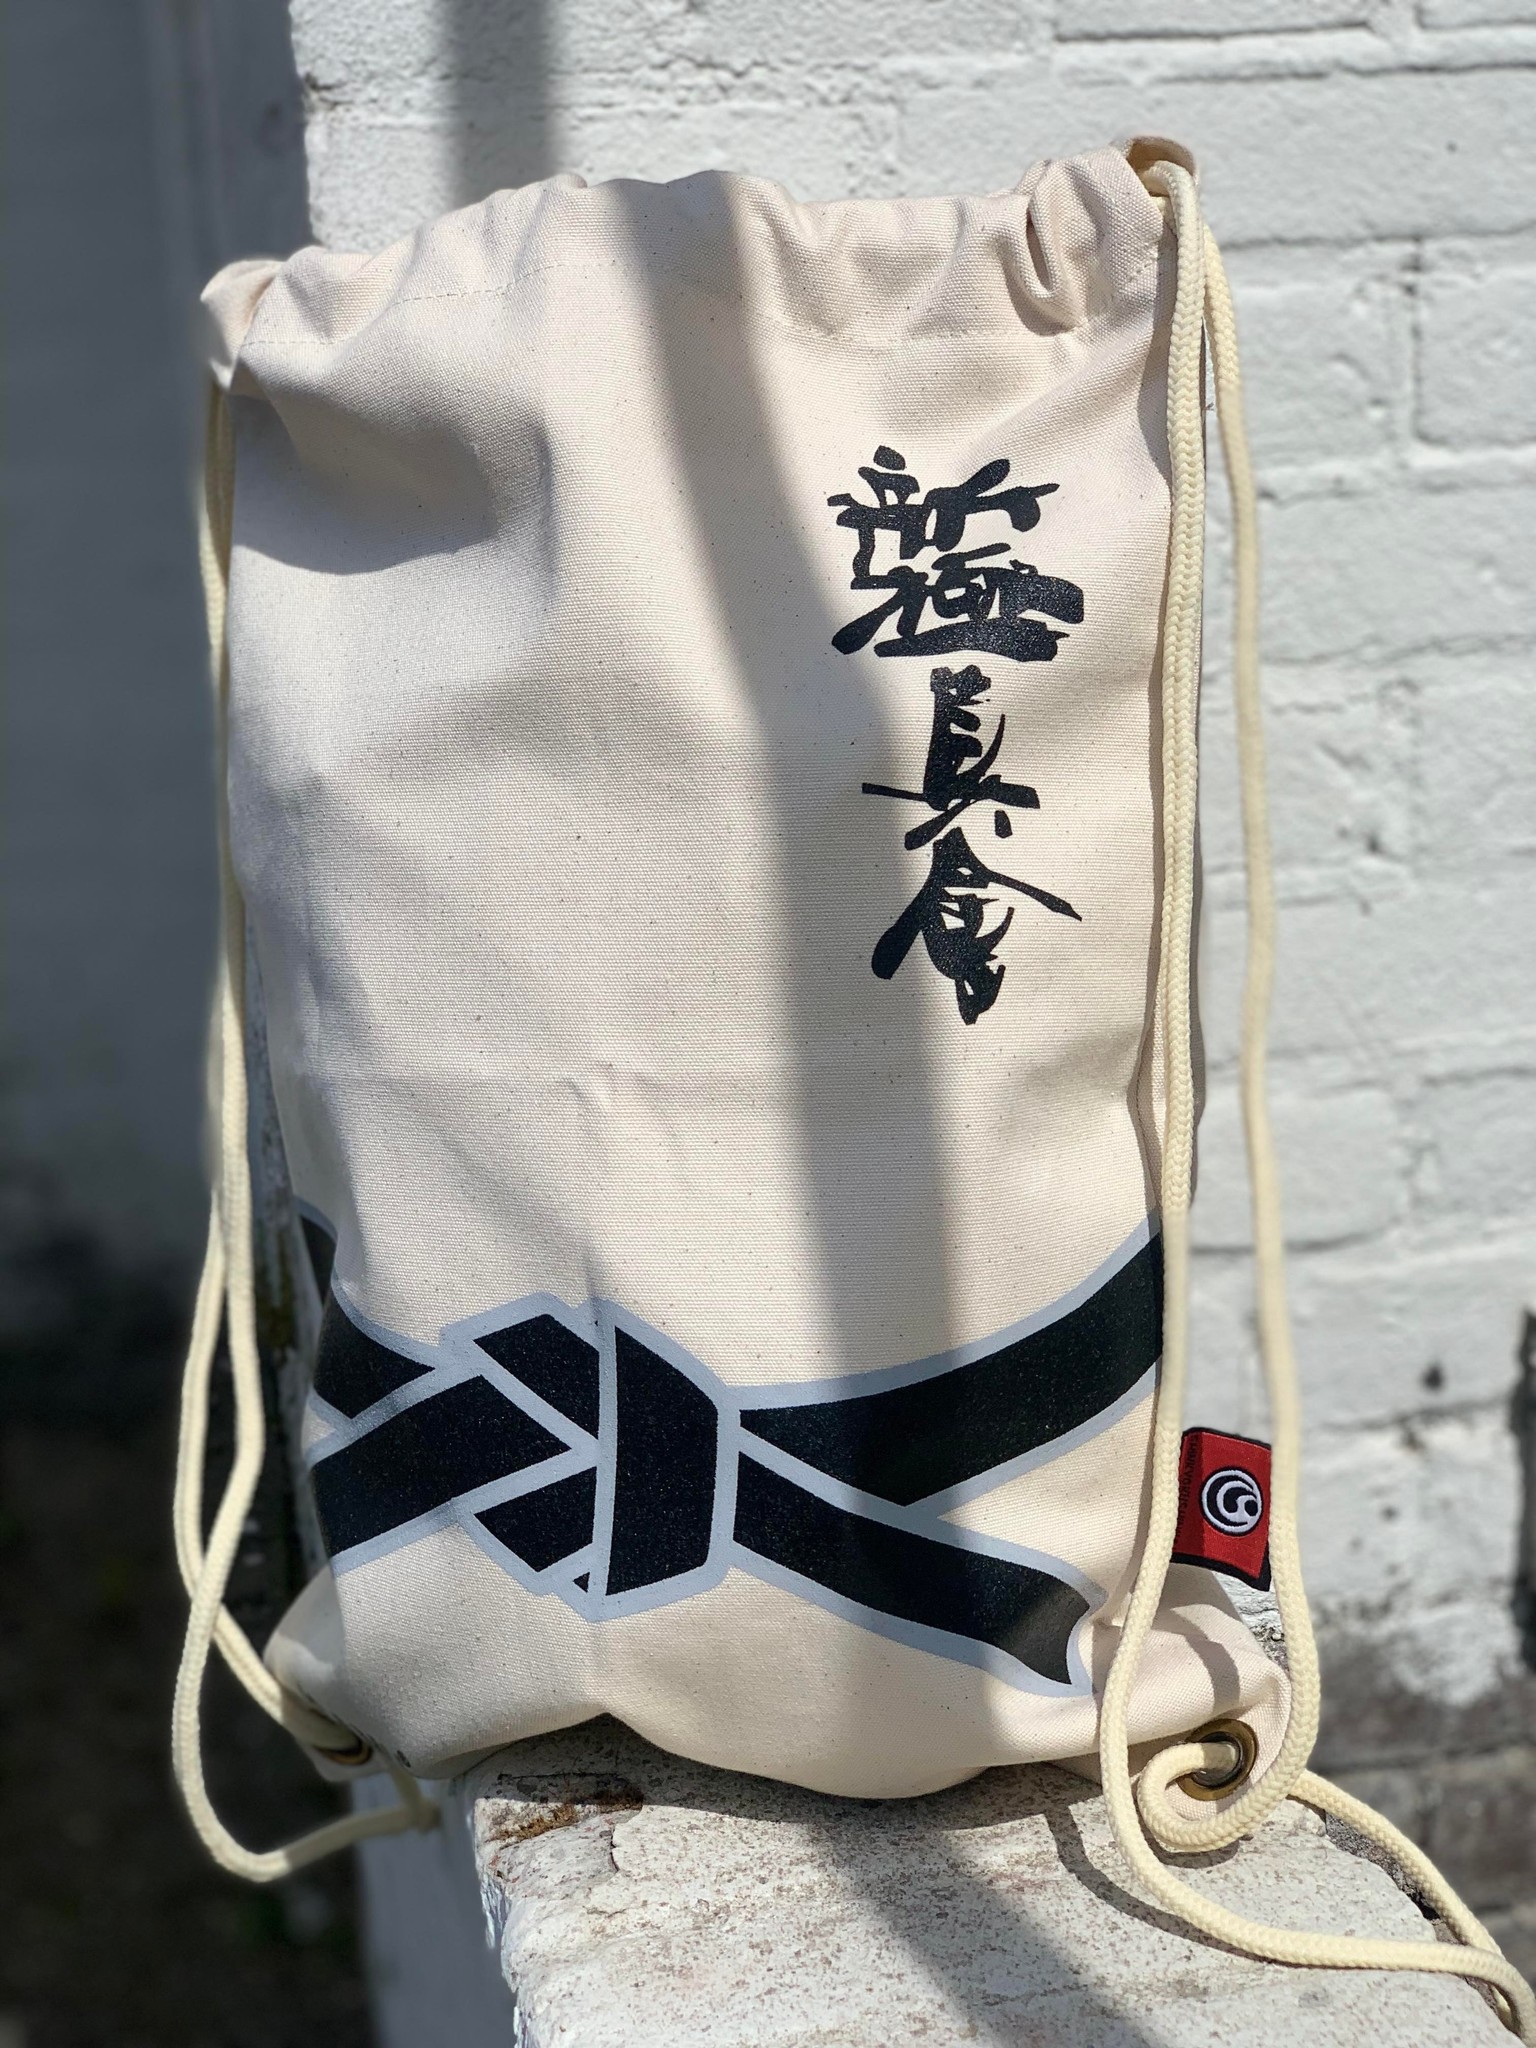 Blitz Karate Martial Arts Drum Bag | eBay